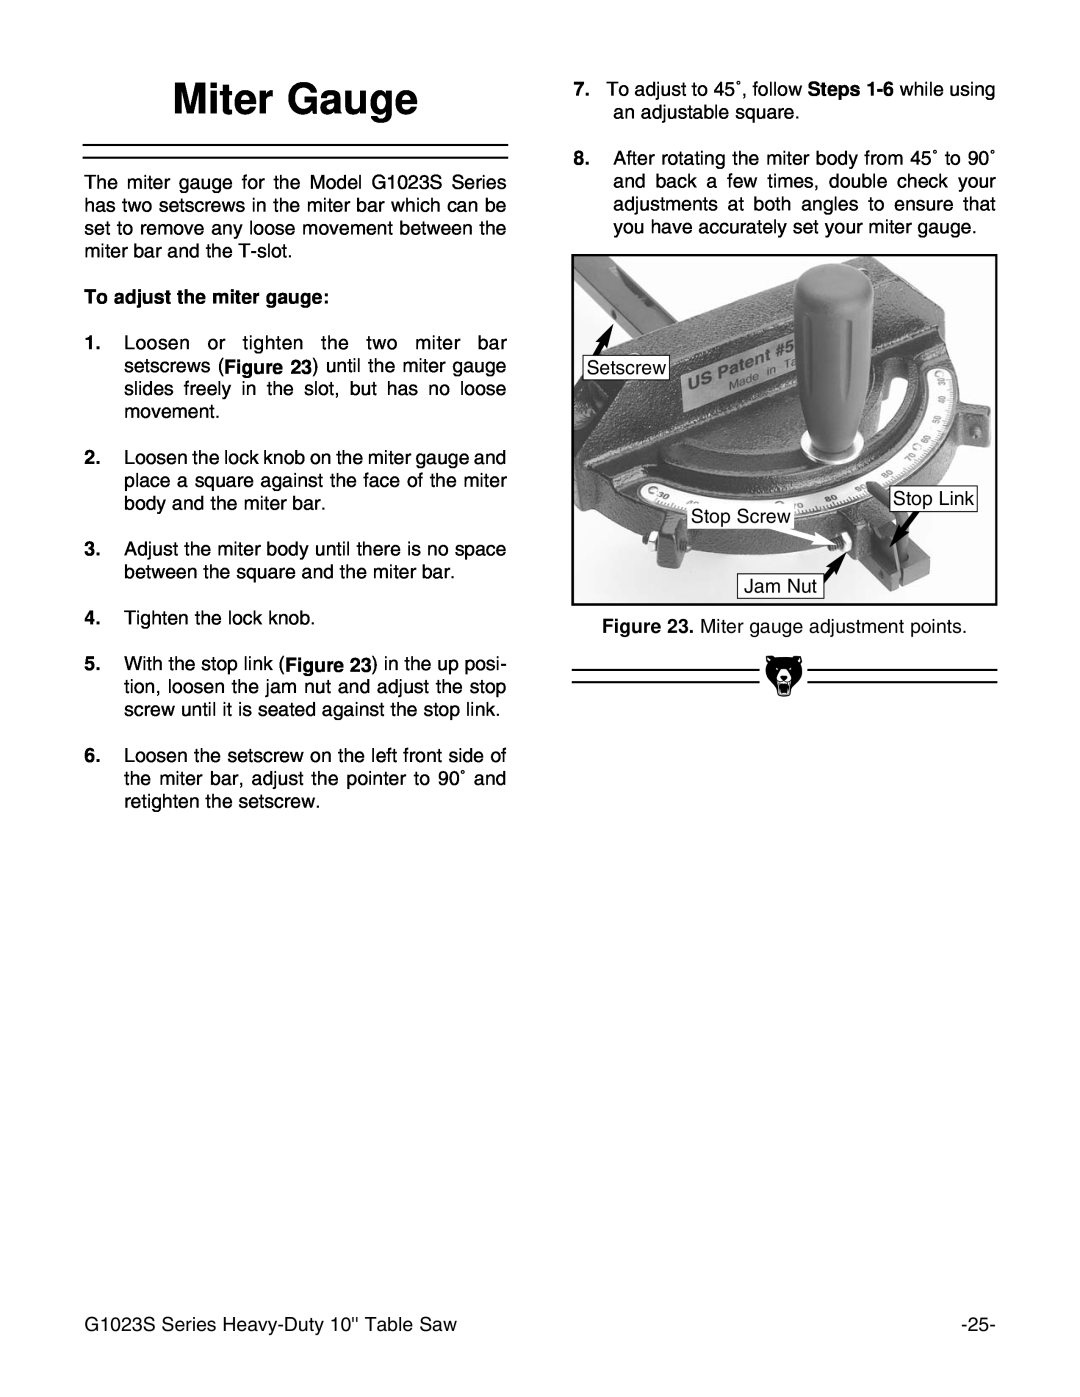 Grizzly MODEL instruction manual Miter Gauge, To adjust the miter gauge 